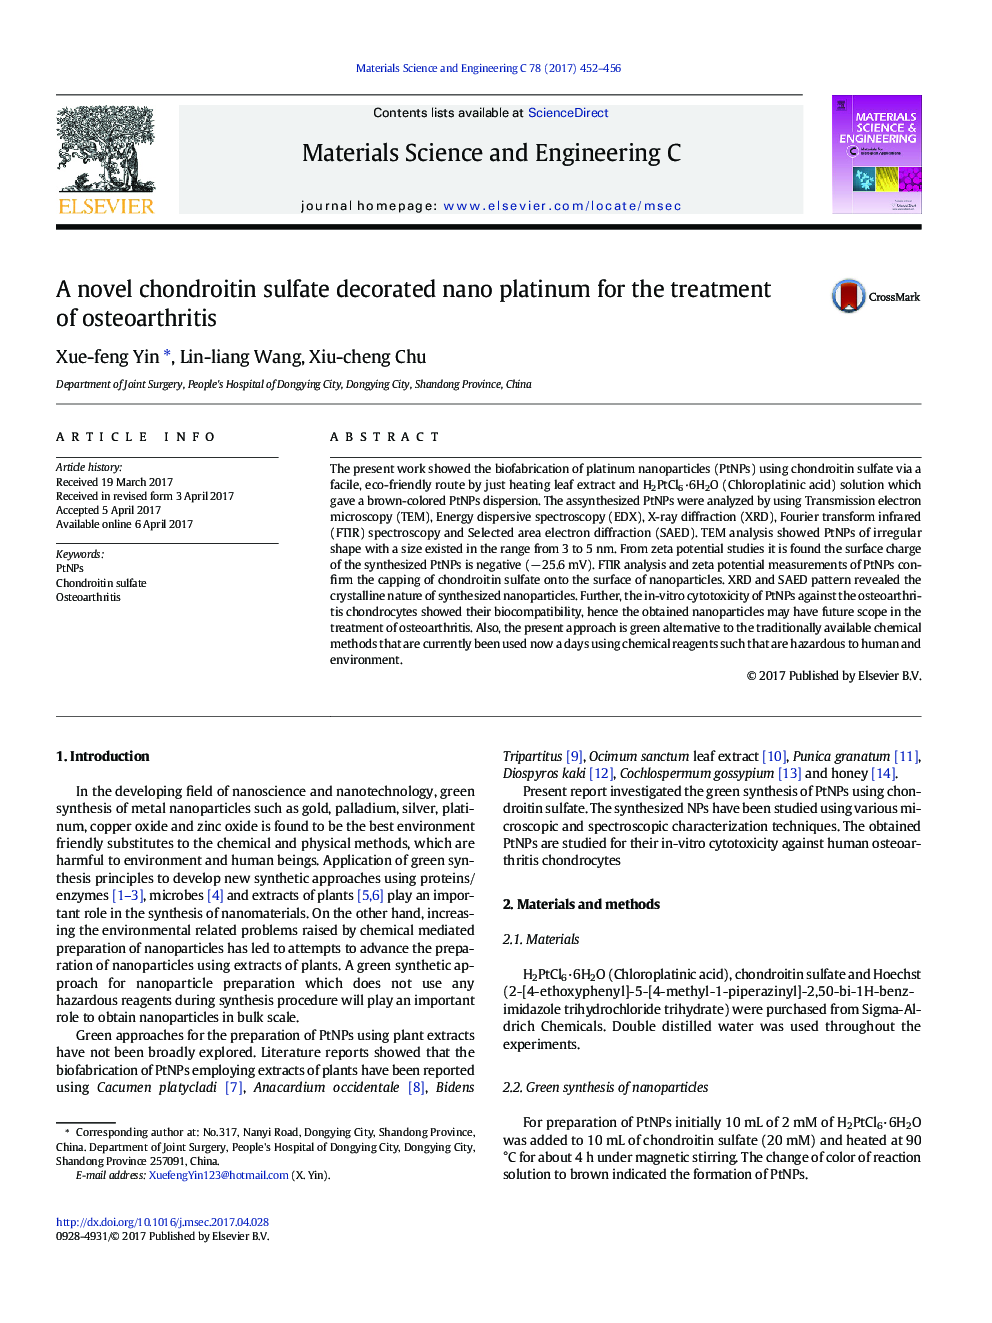 A novel chondroitin sulfate decorated nano platinum for the treatment of osteoarthritis